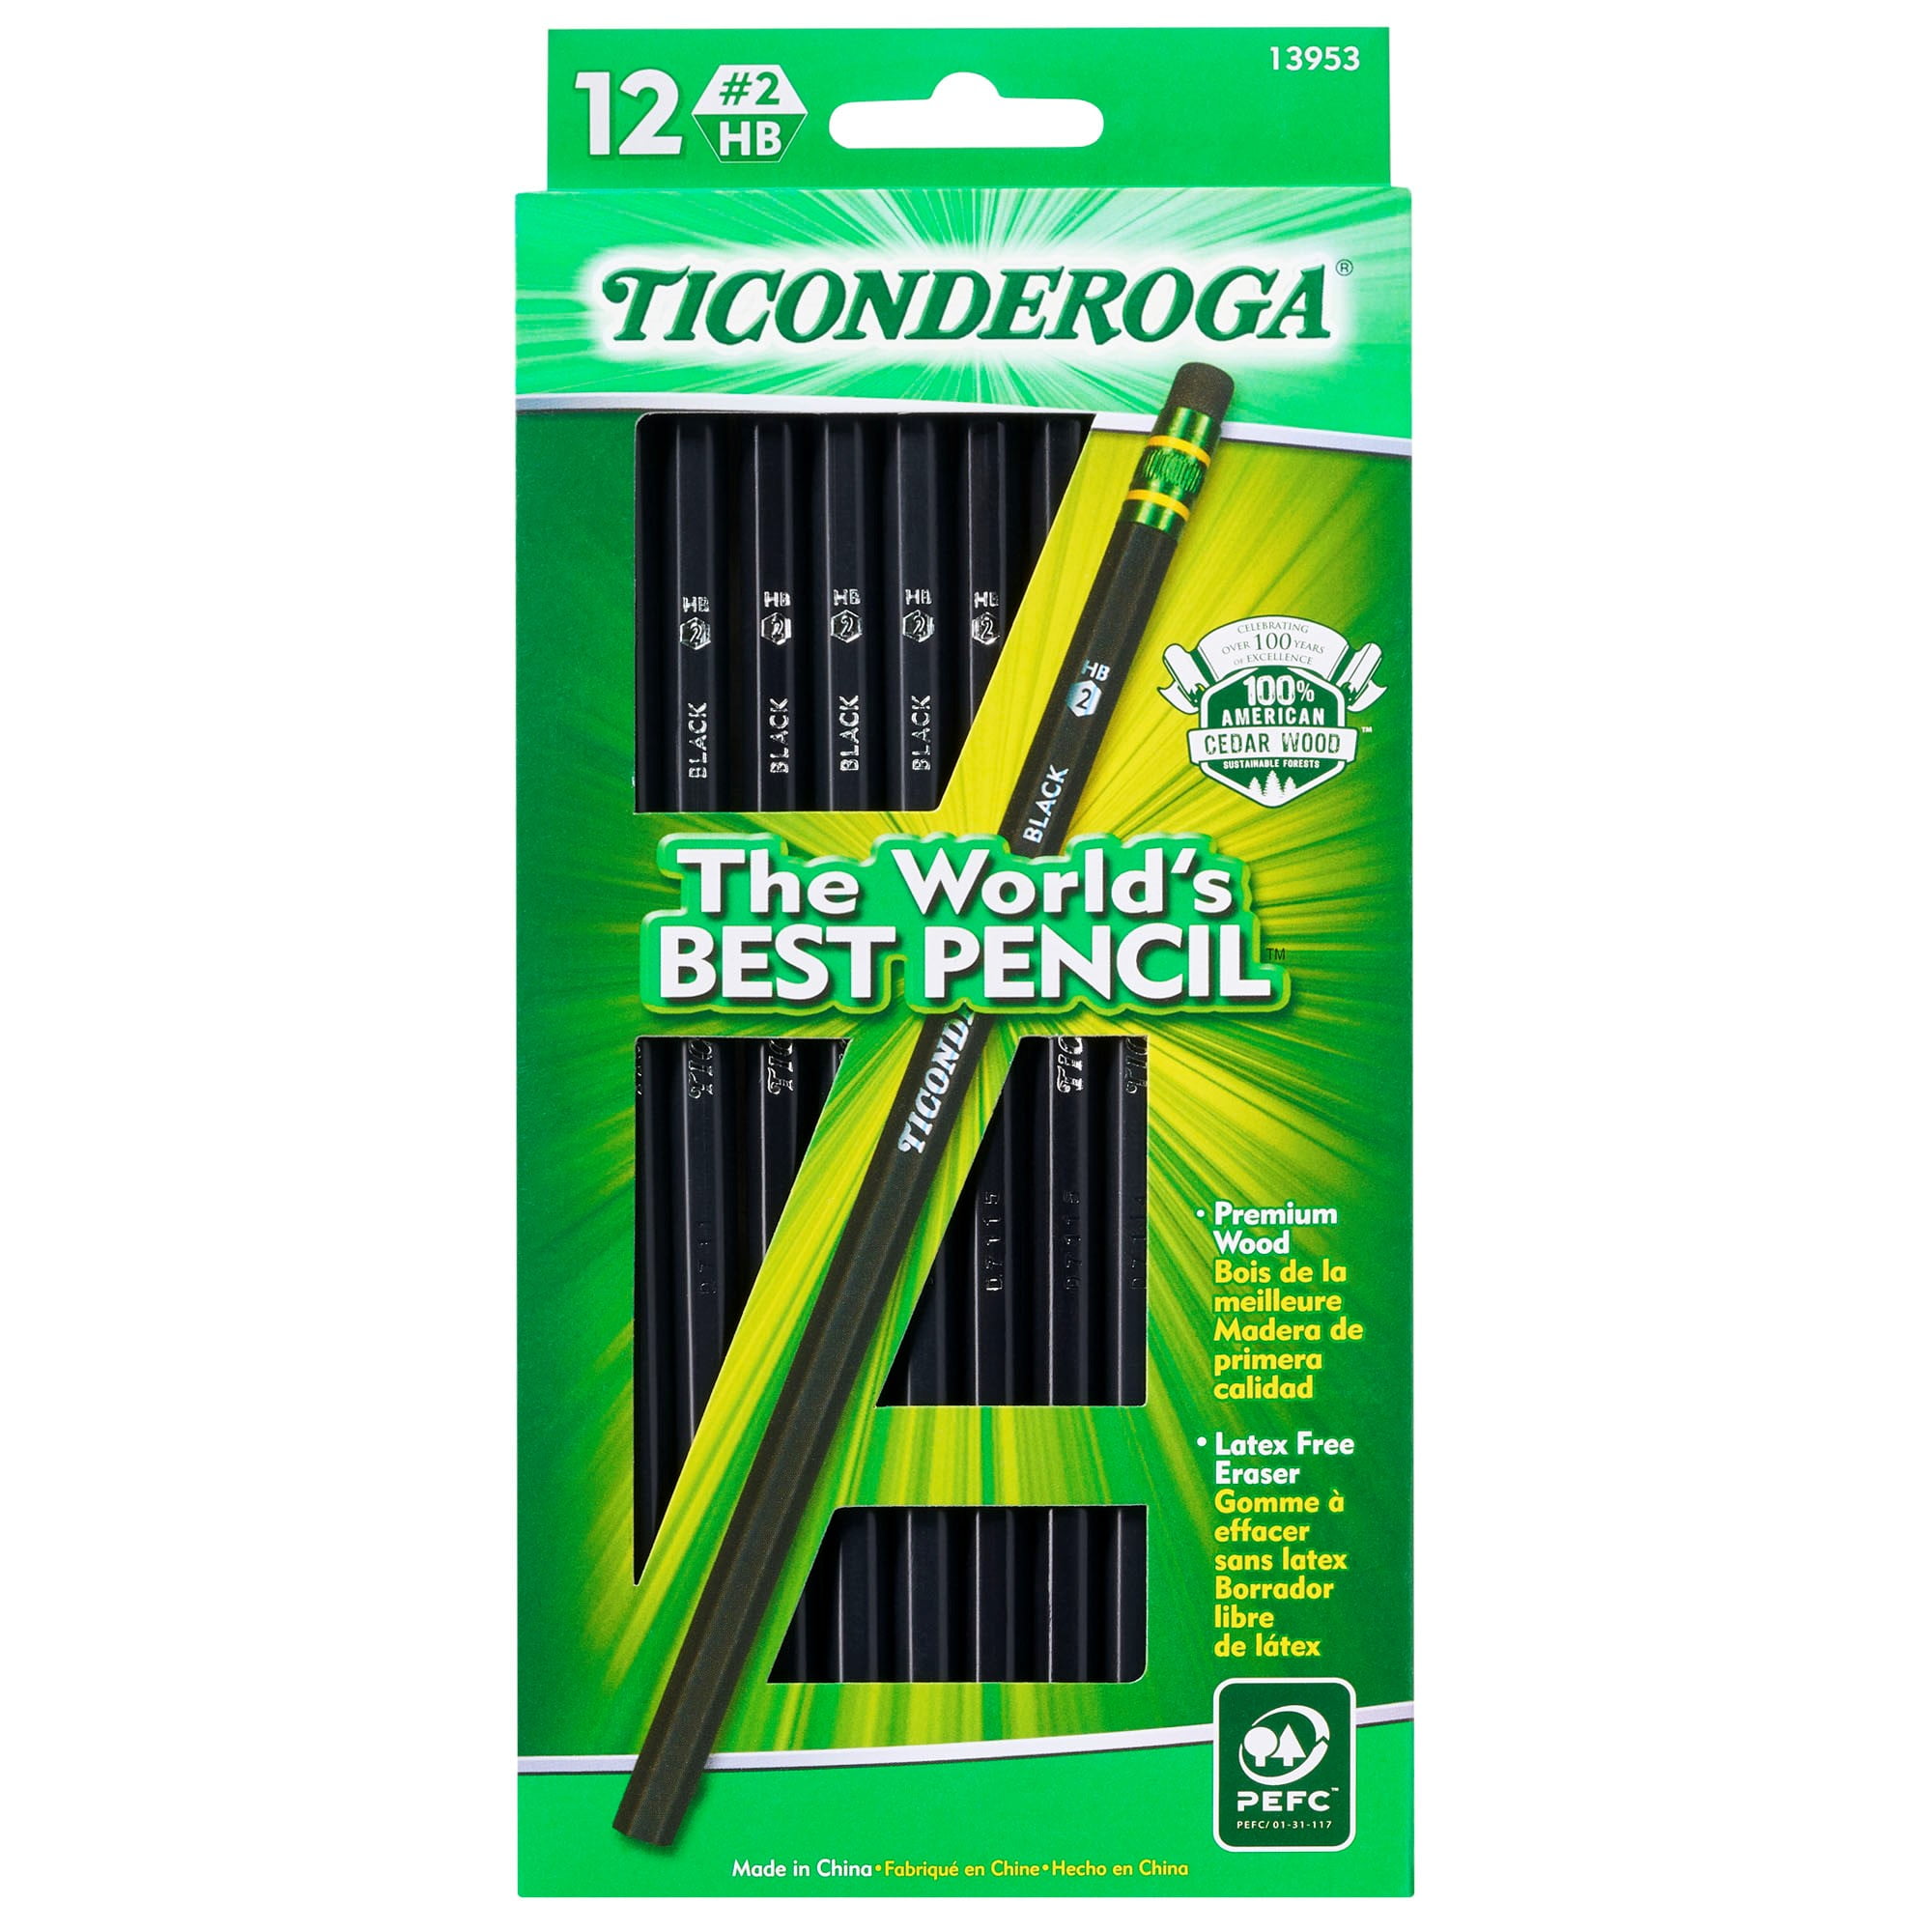 softest pencil